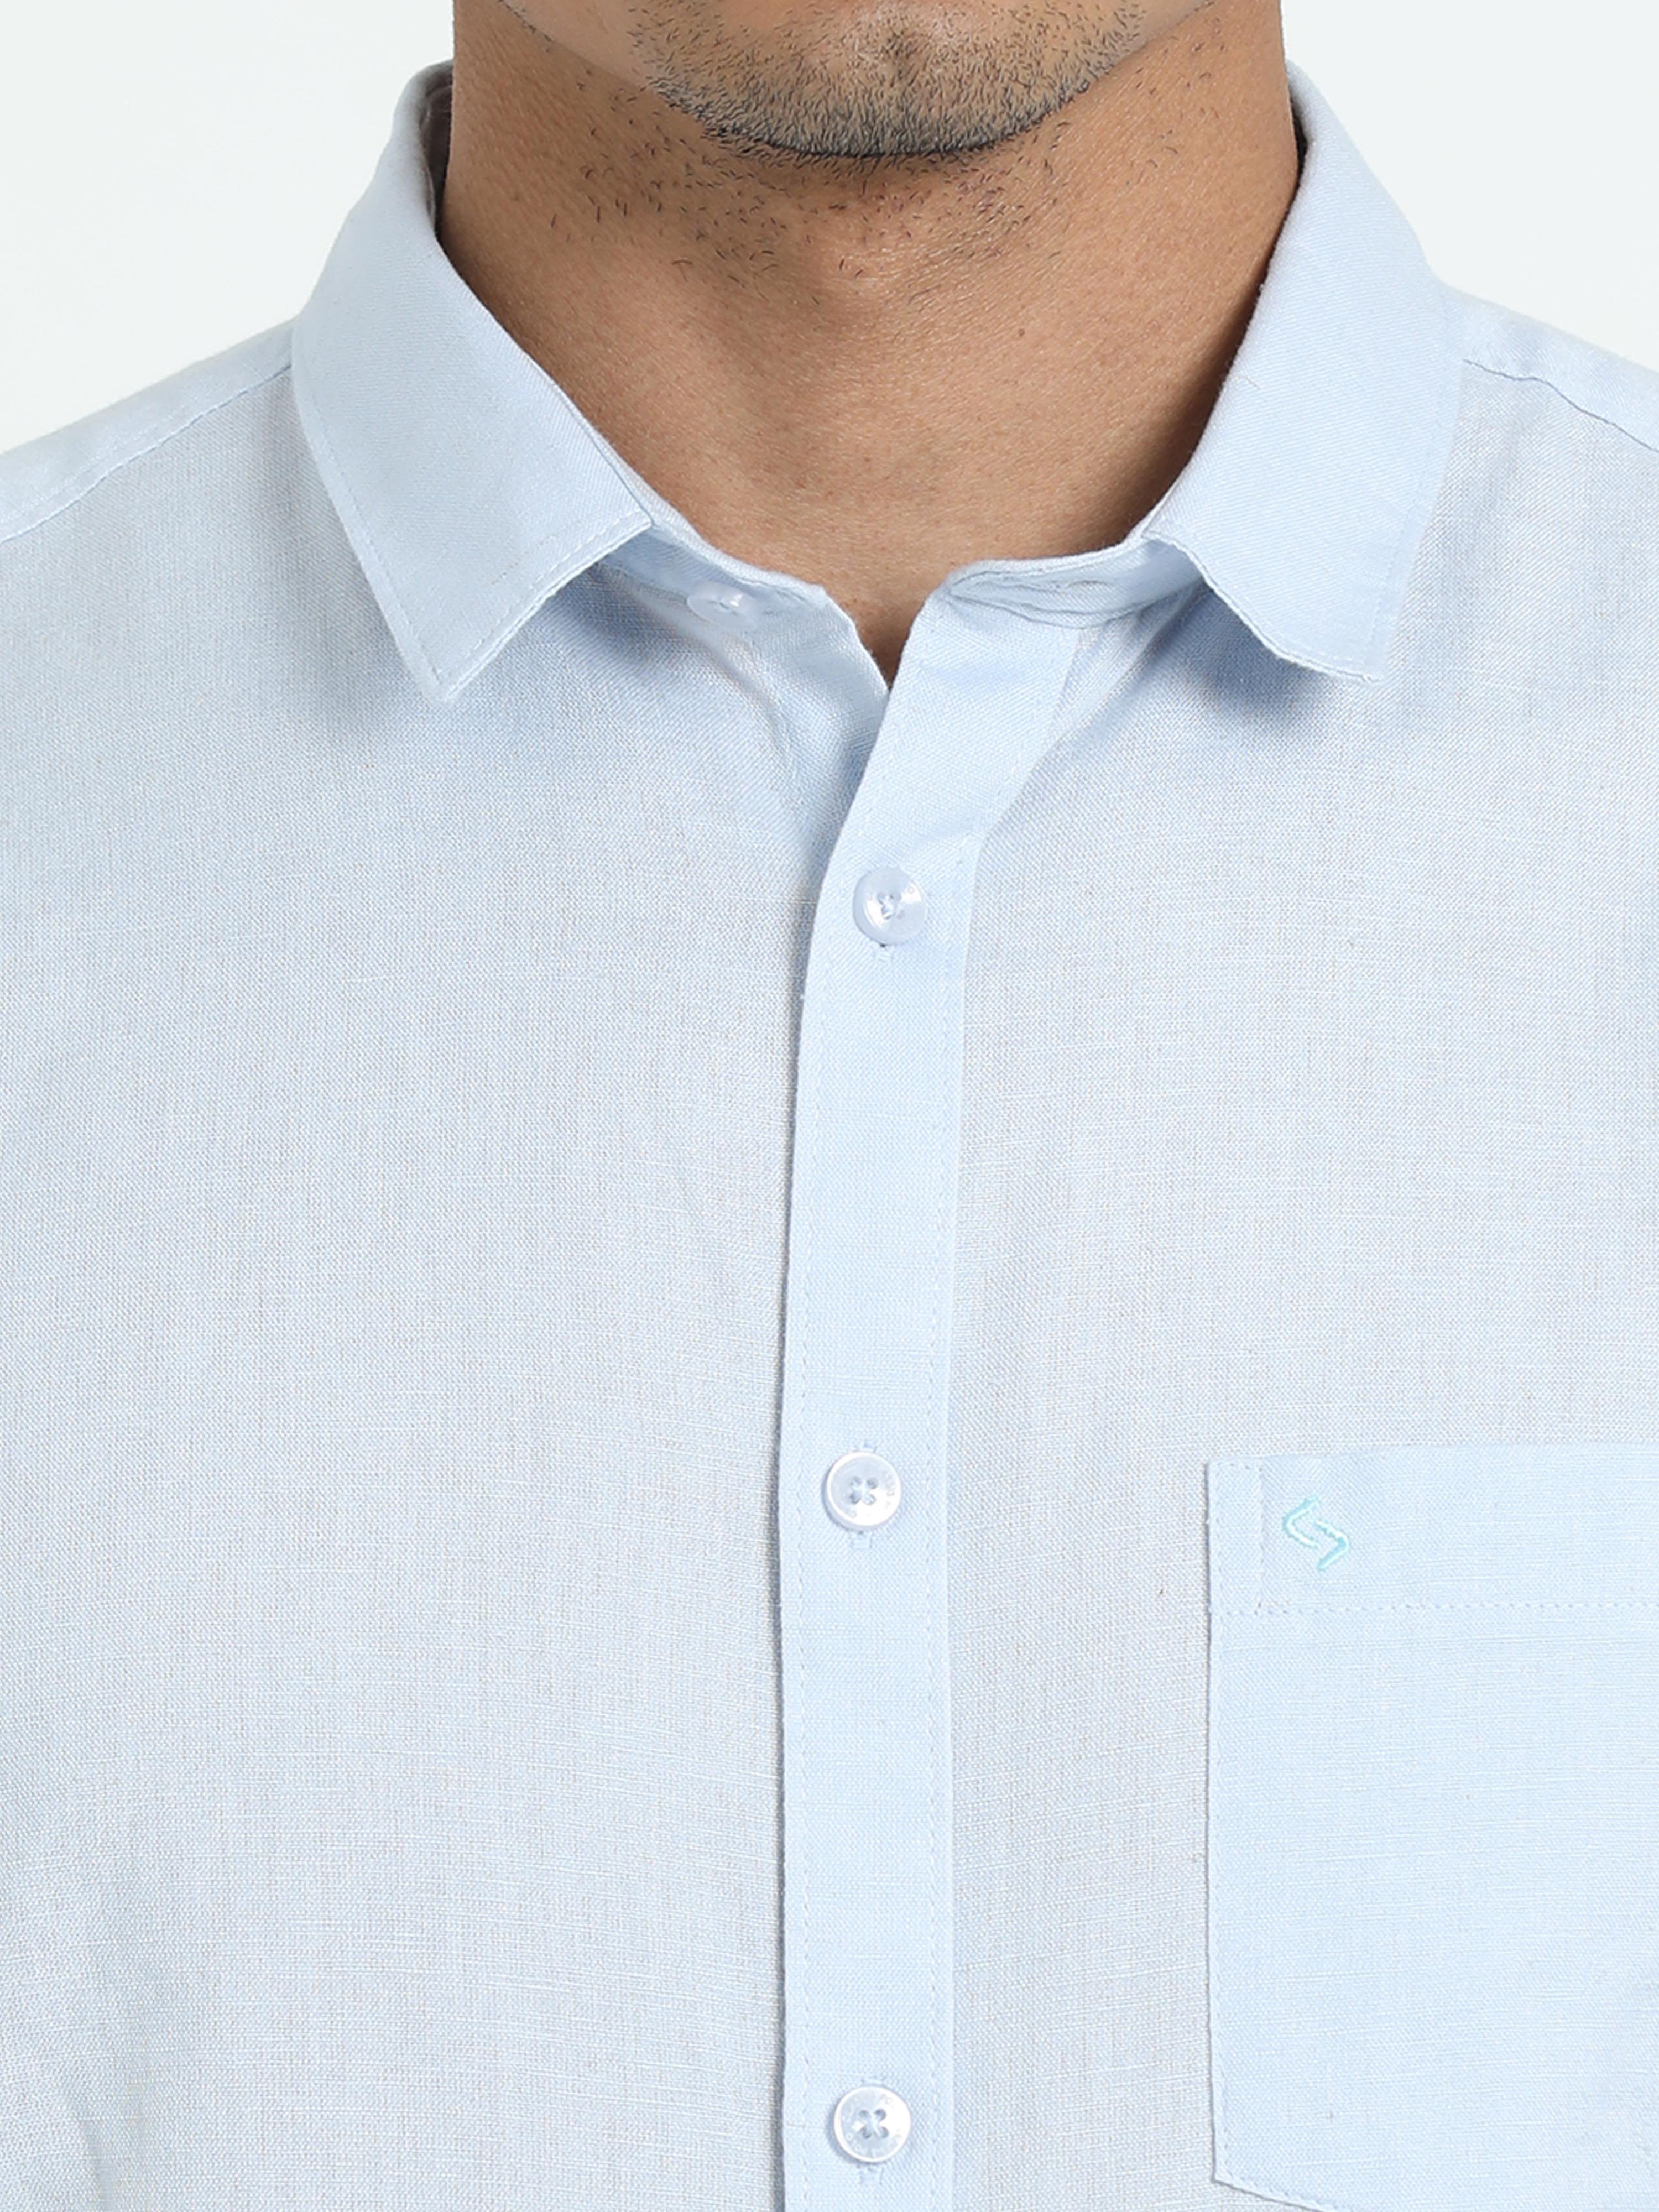 Classic Polo Men's Solid Sky Cotton Linen Full Sleeve Woven Shirt | DAMASK-SKY SF FS